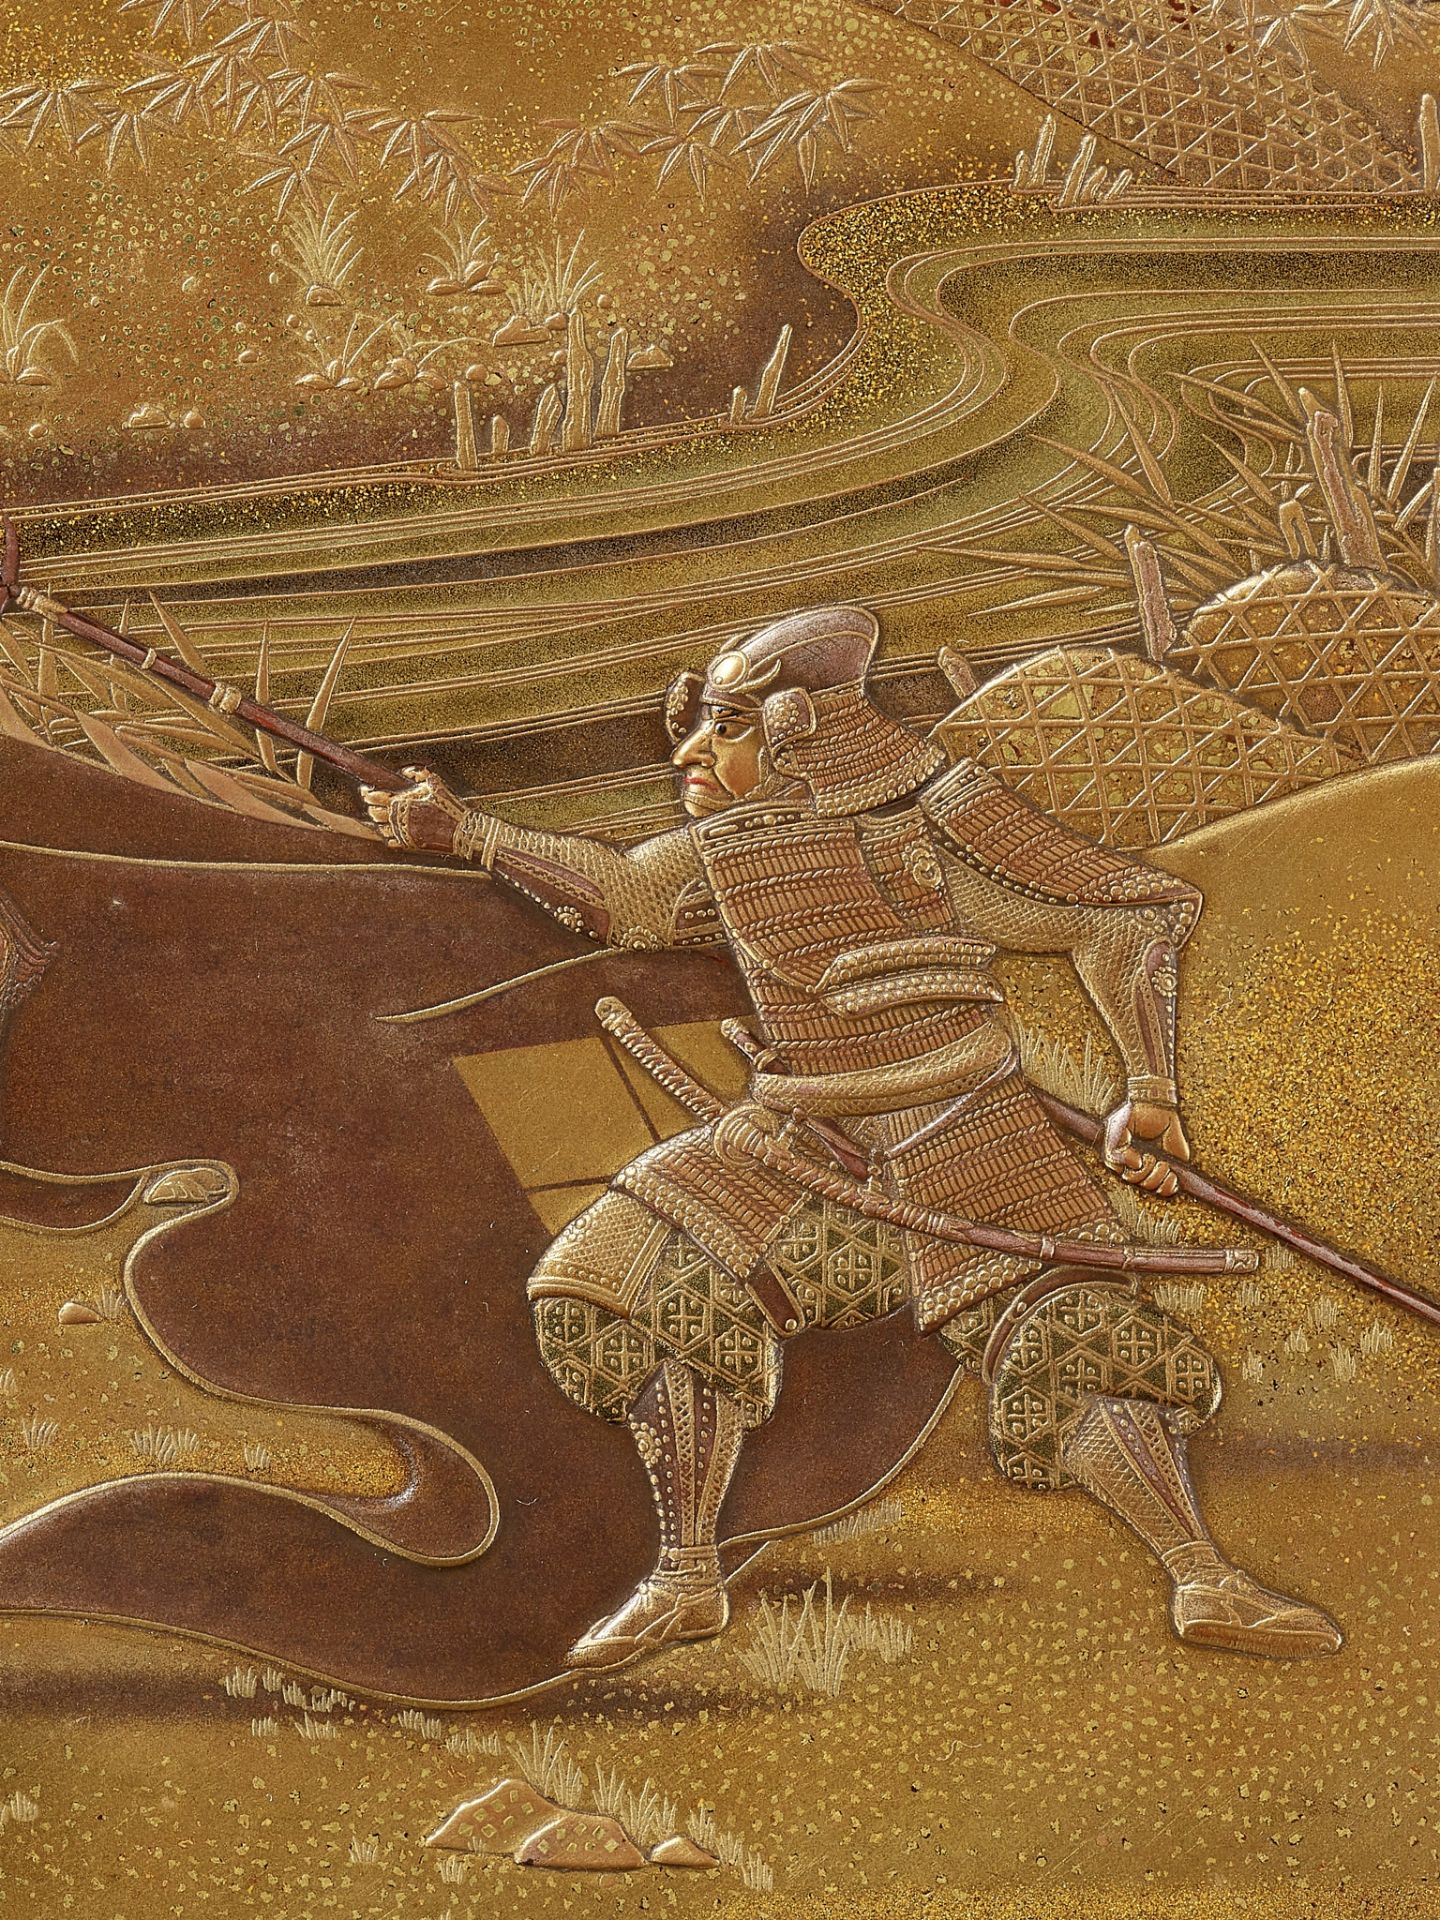 A GOLD LACQUER SUZURIBAKO DEPICTING THE BATTLE OF KAWANAKAJIMA - Image 9 of 14